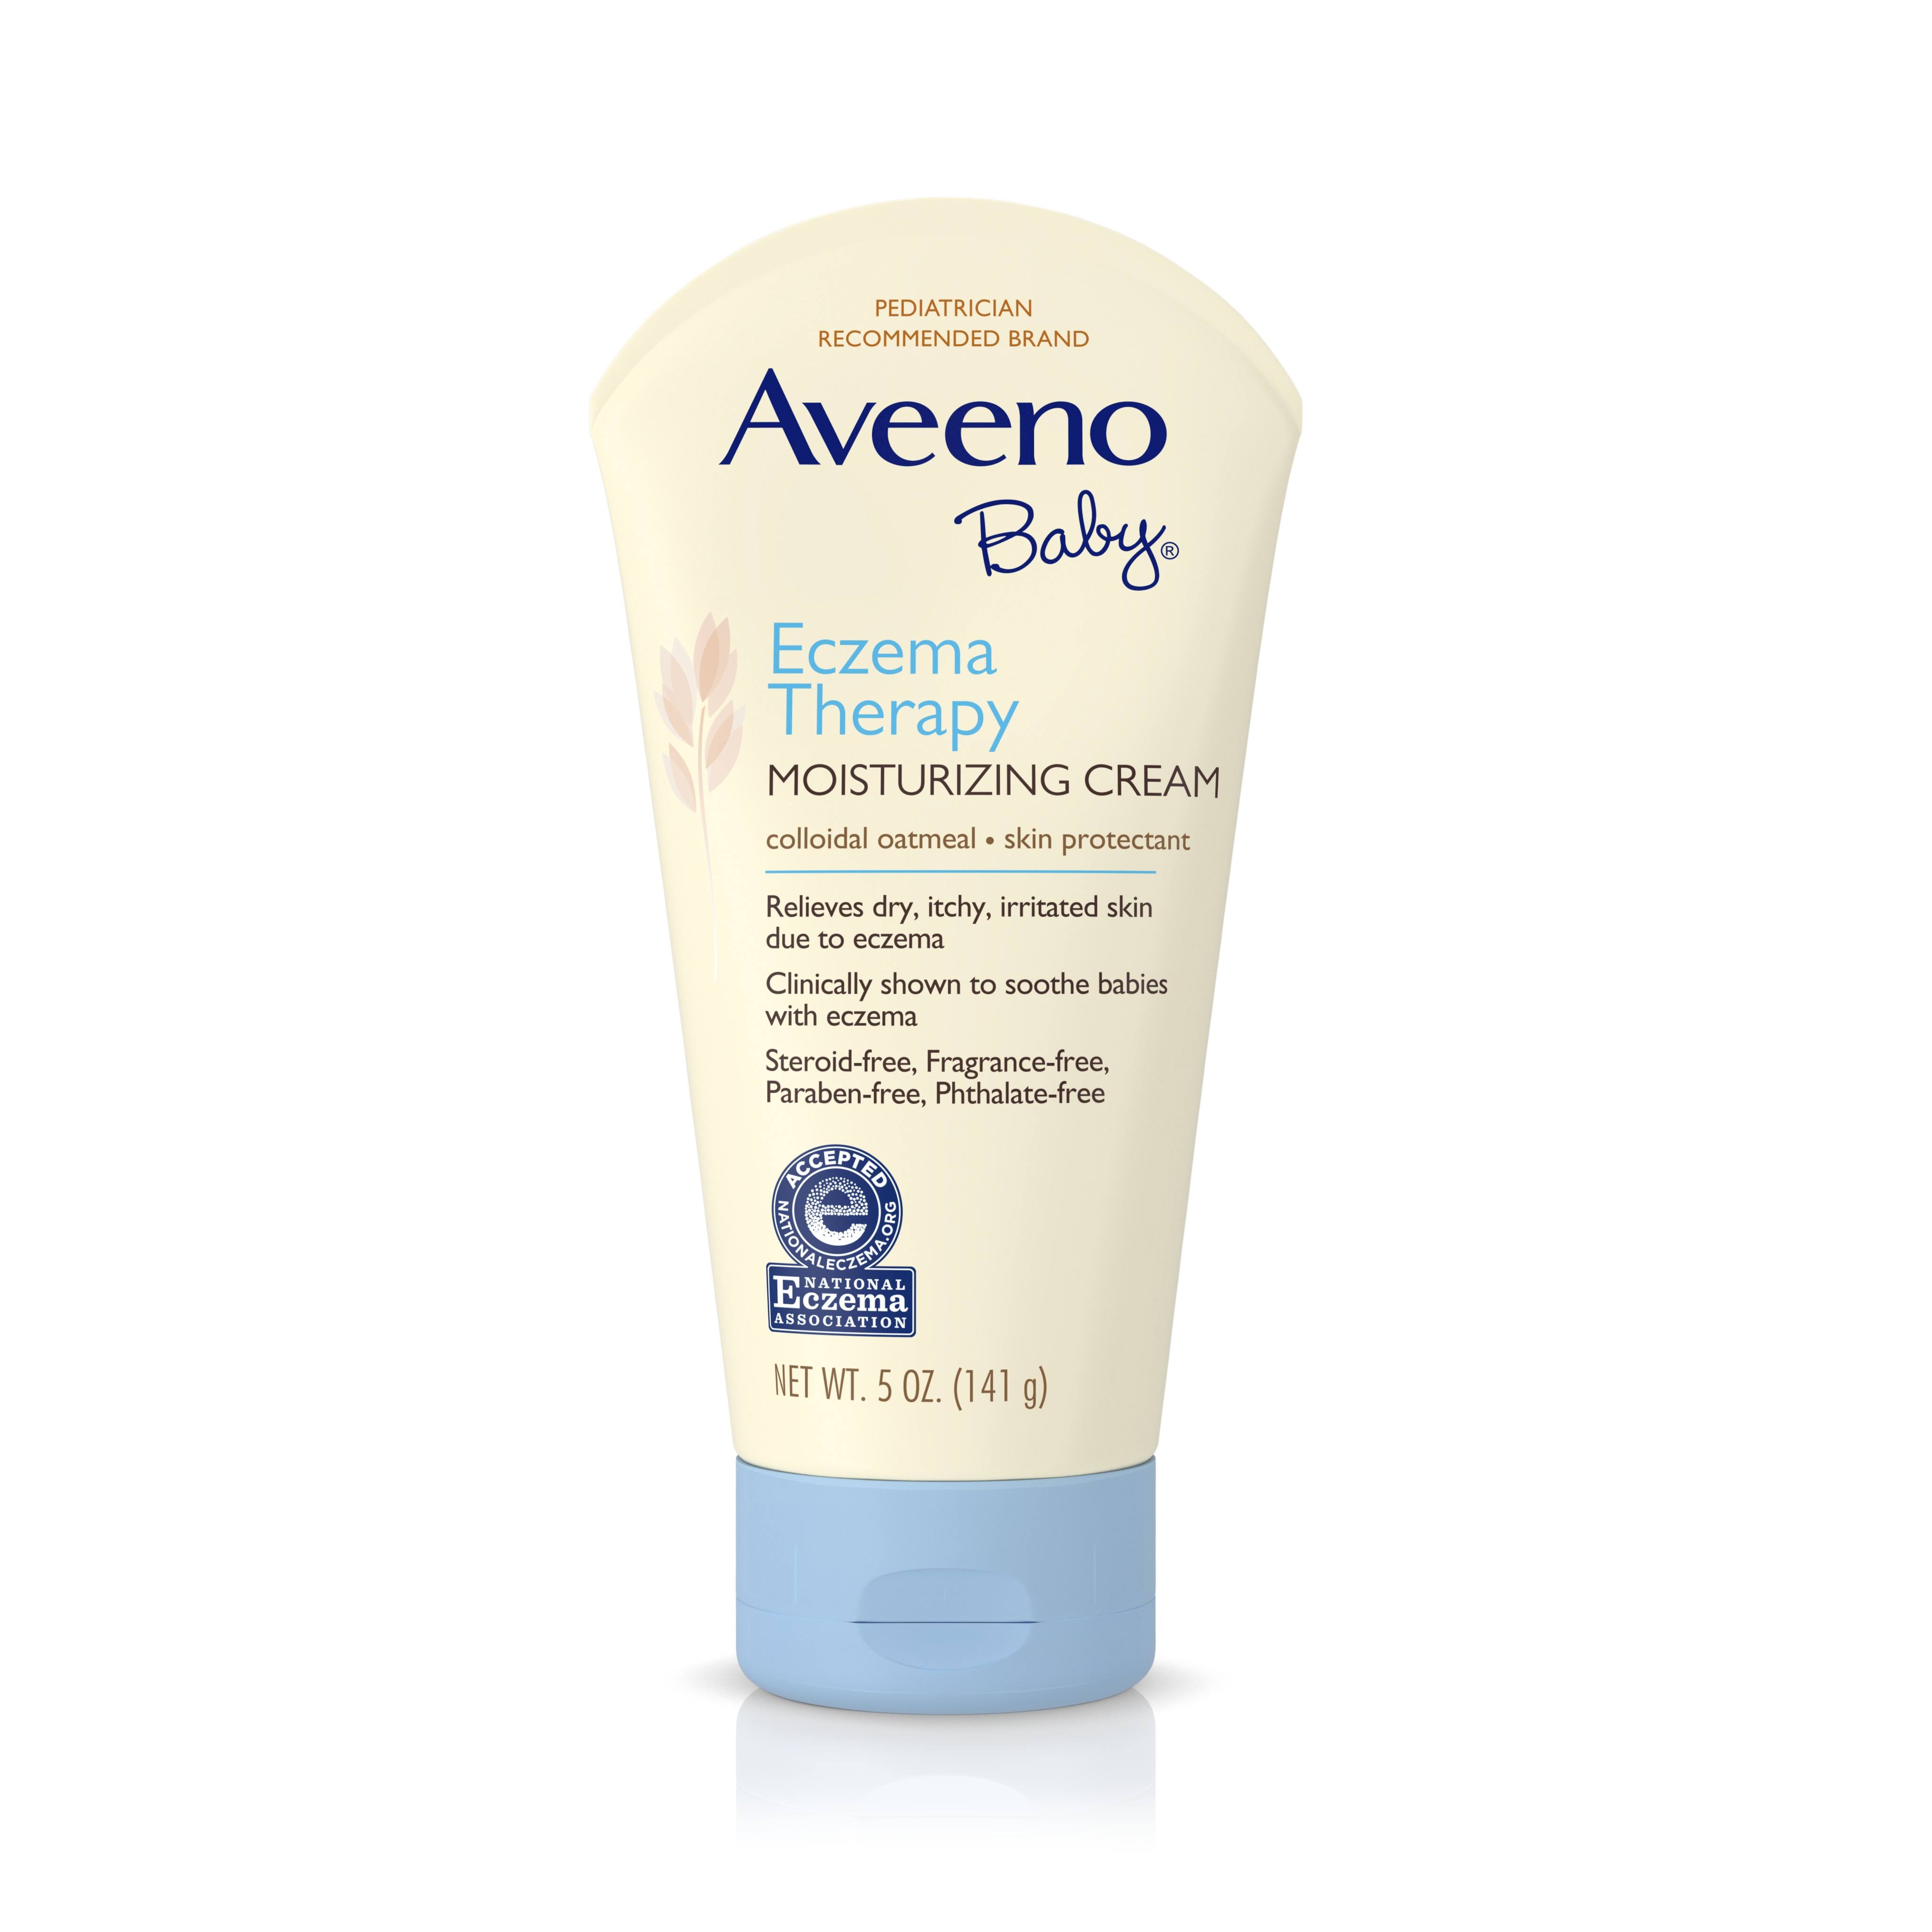 Aveeno Baby Eczema Therapy Moisturizing Cream - 5 oz